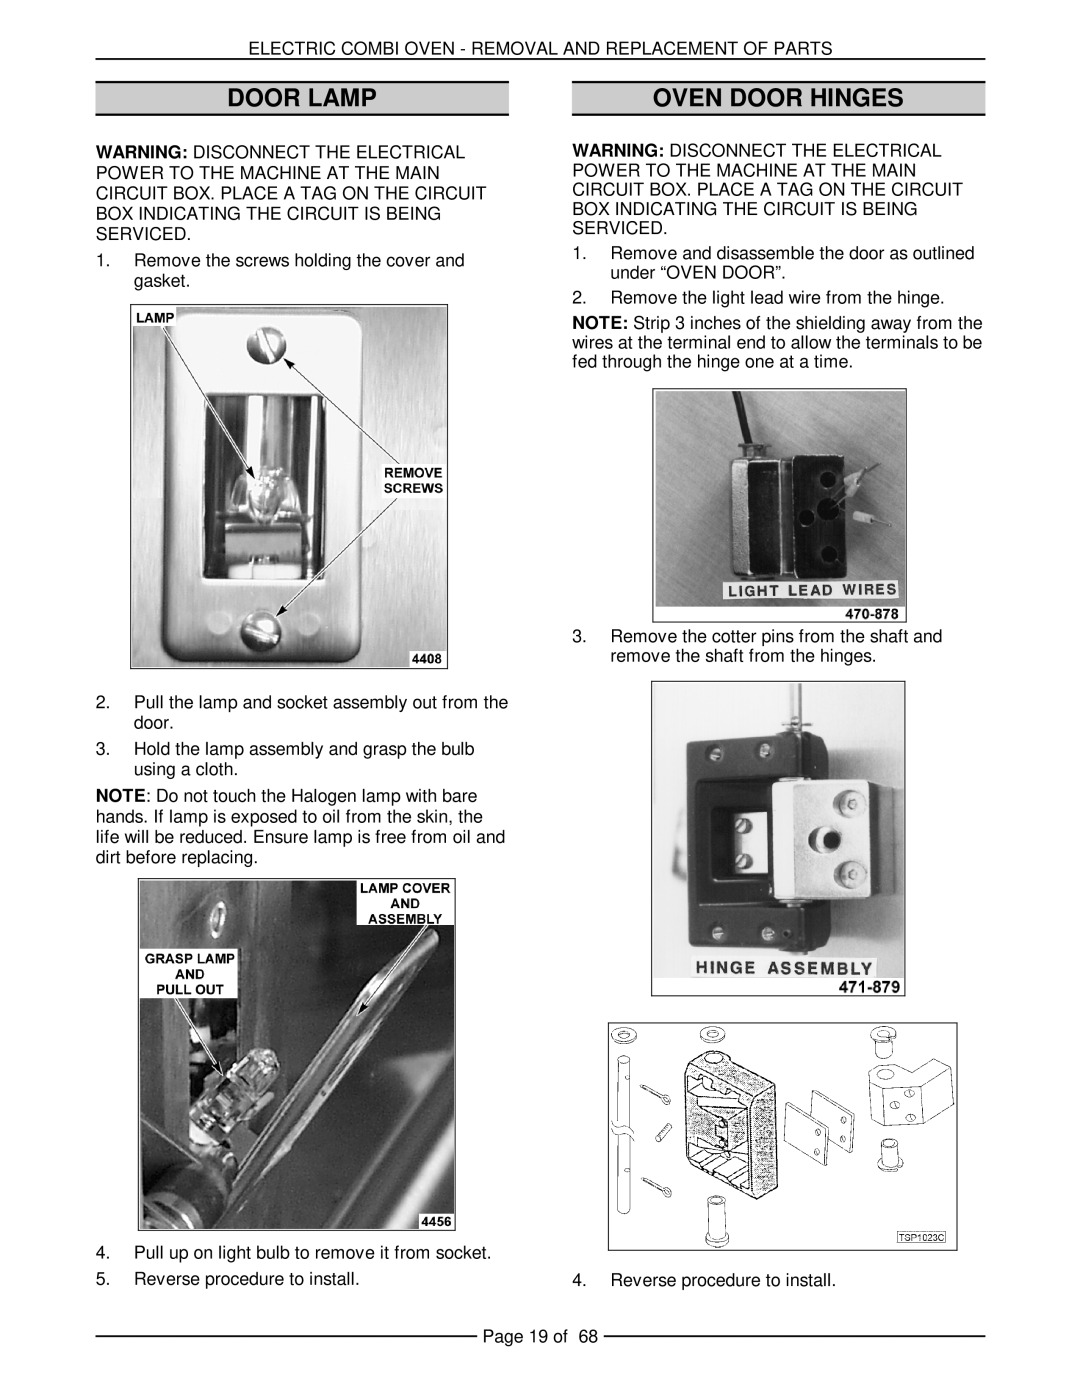 Vulcan-Hart VCE10F 126179, VCE20H 126172, VCE10H 126178, VCE6H 126177, VCE20F 126173 service manual Door Lamp, Oven Door Hinges 